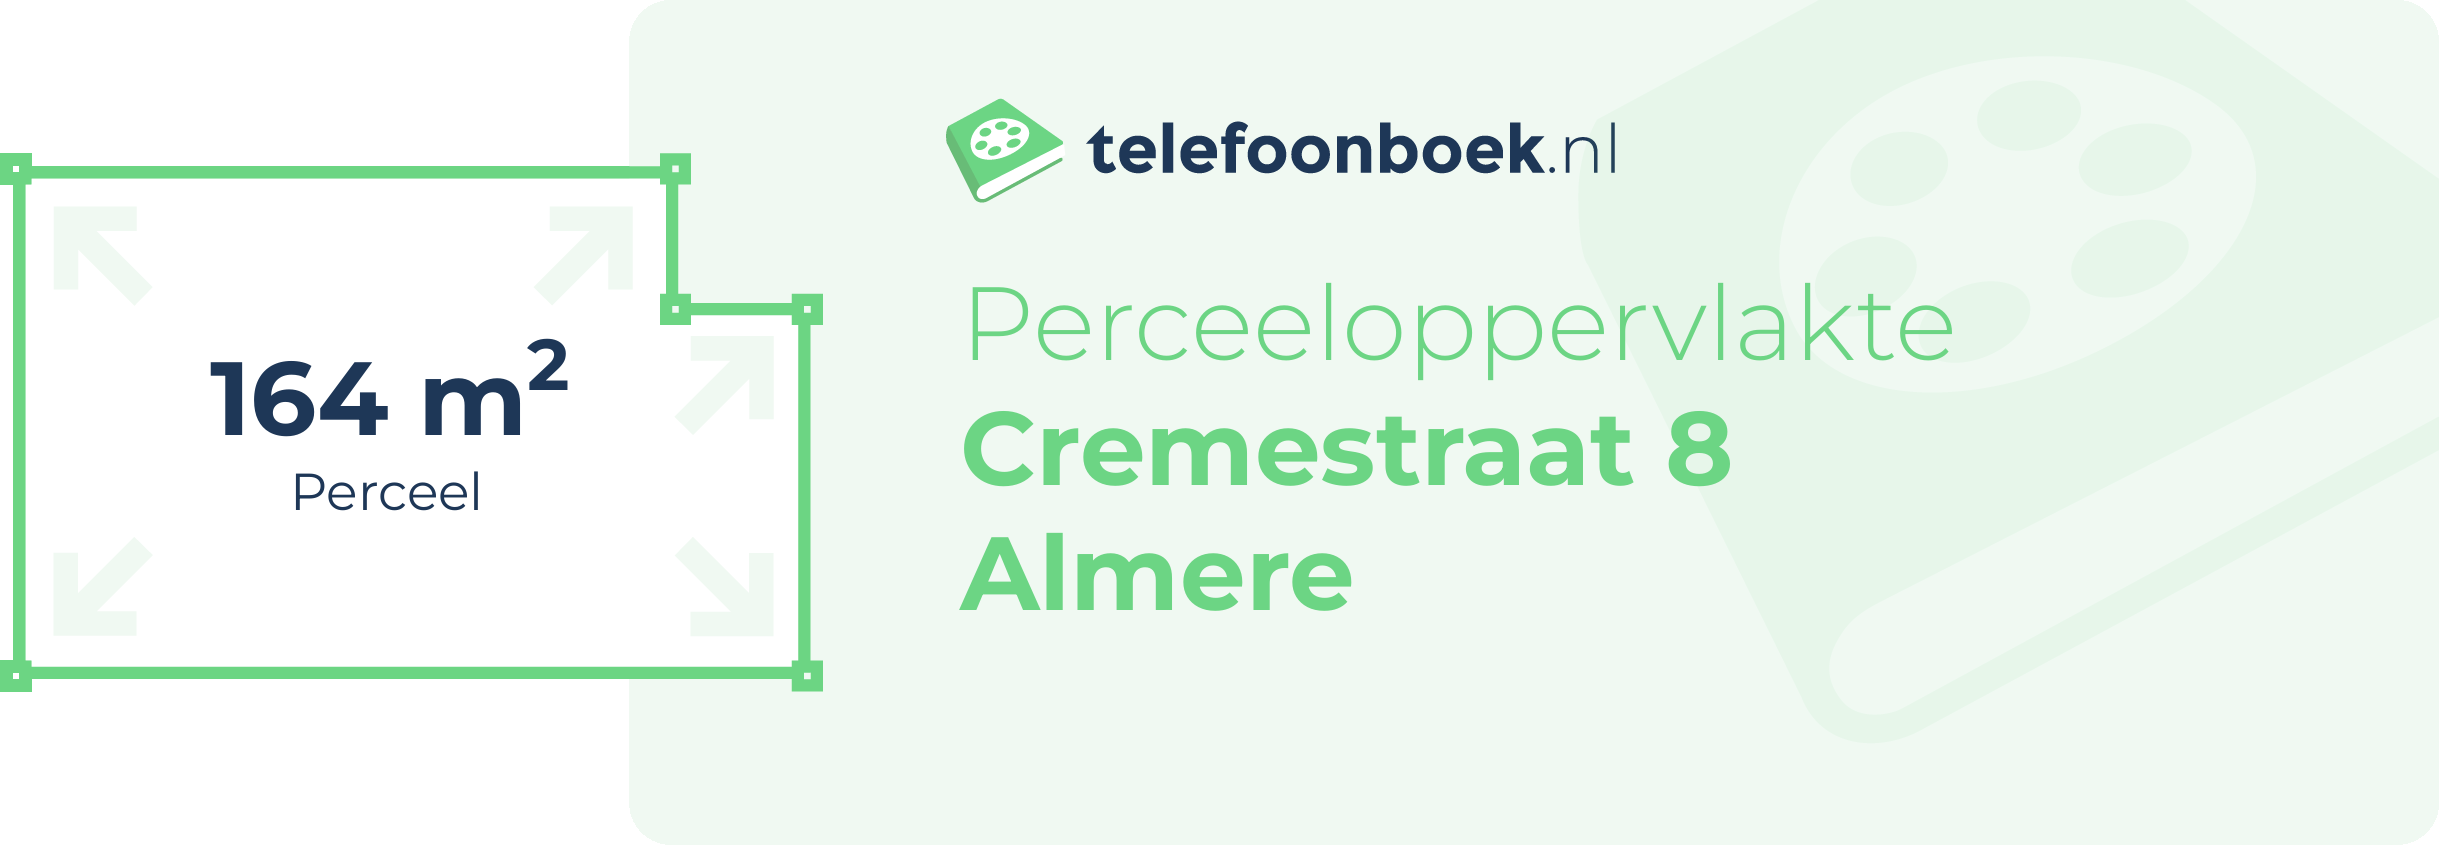 Perceeloppervlakte Cremestraat 8 Almere